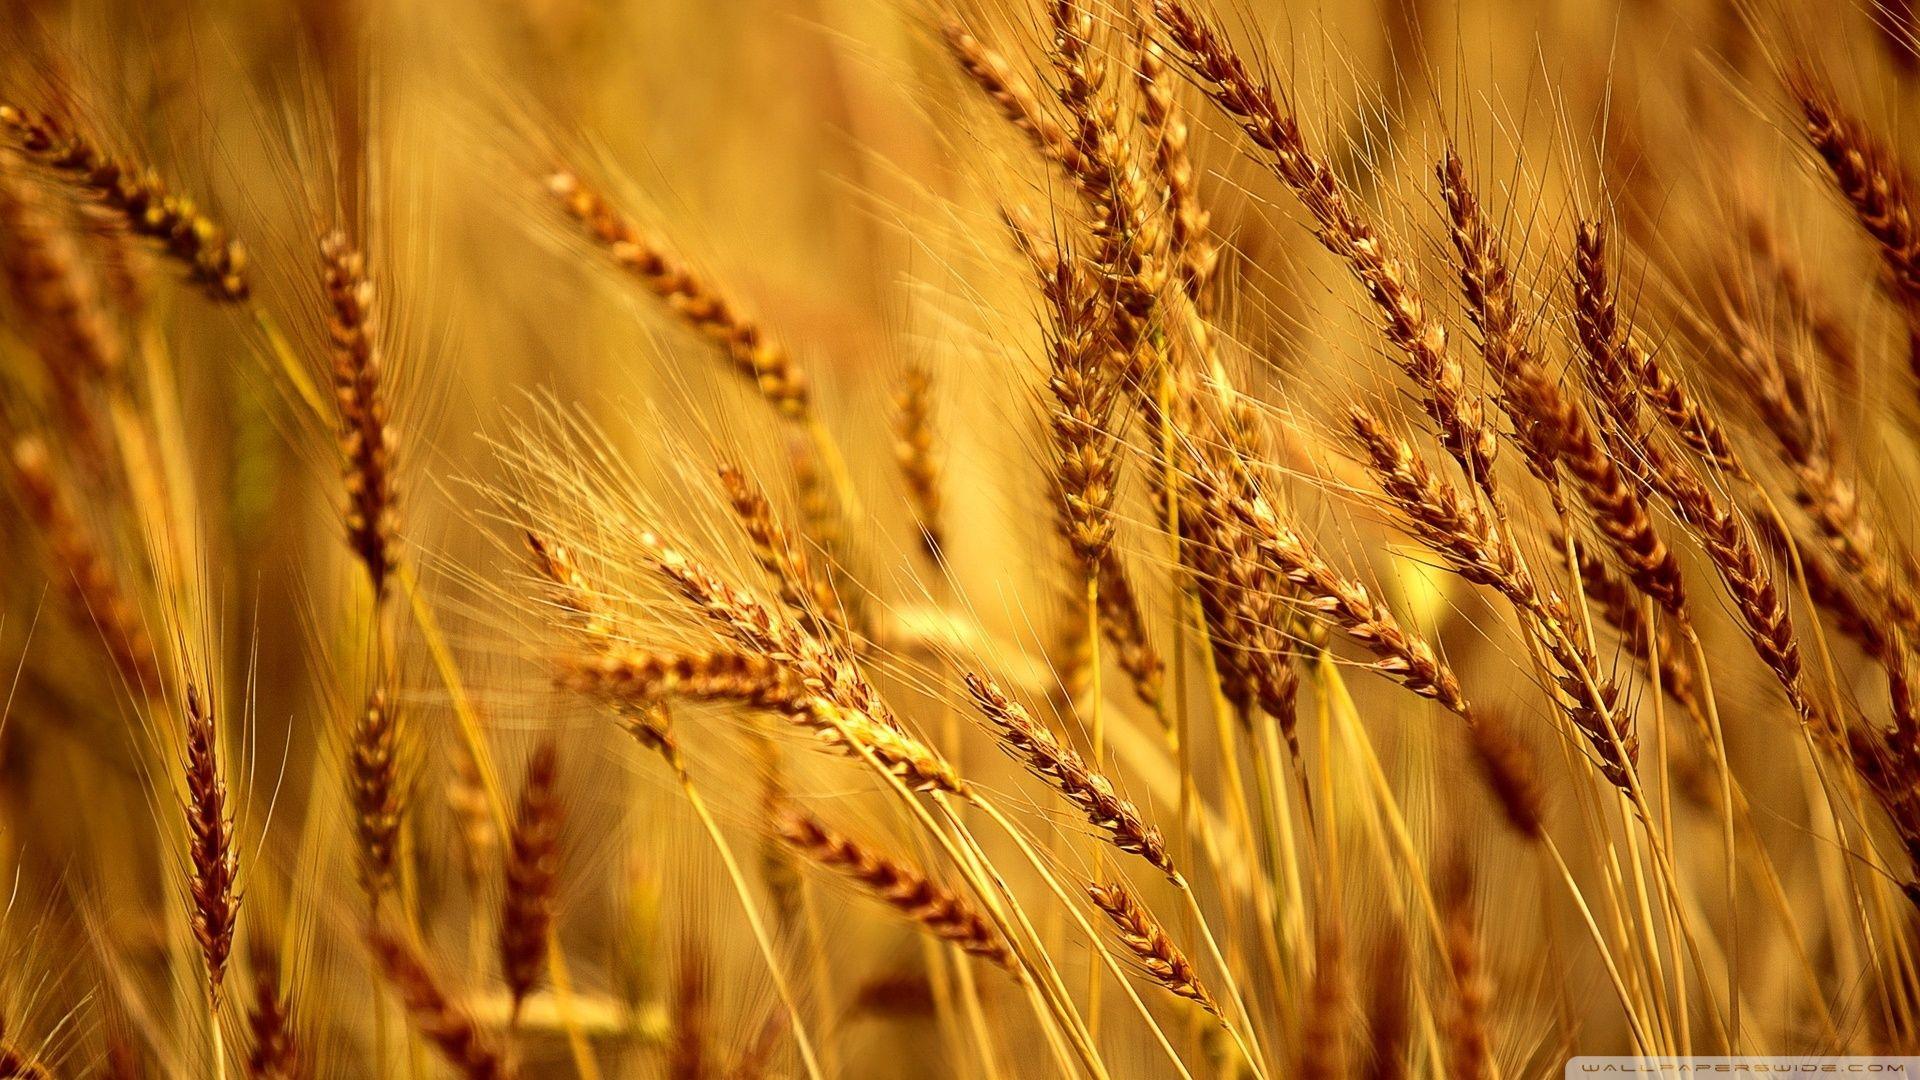 Wheat Field HD desktop wallpapers : Widescreen : High Definition